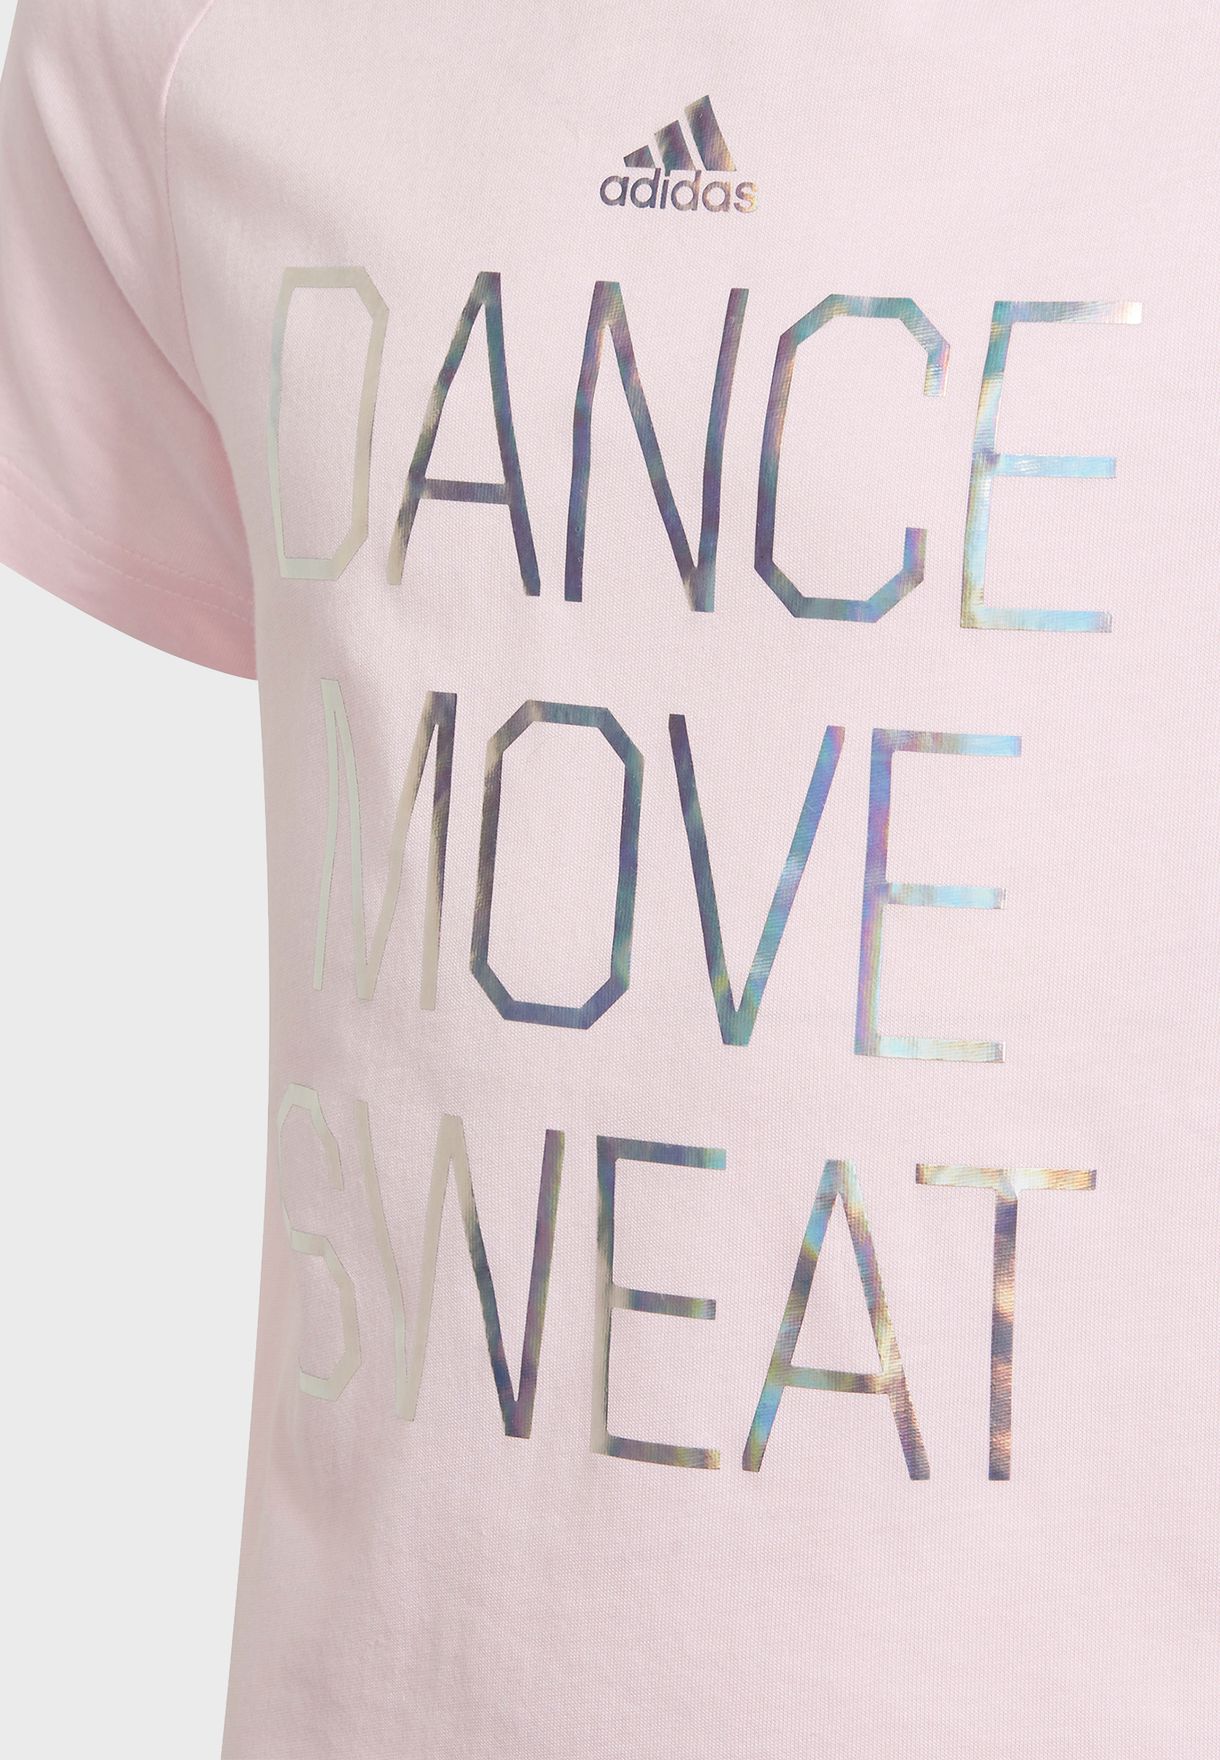 Dance Metallic-Print T-Shirt